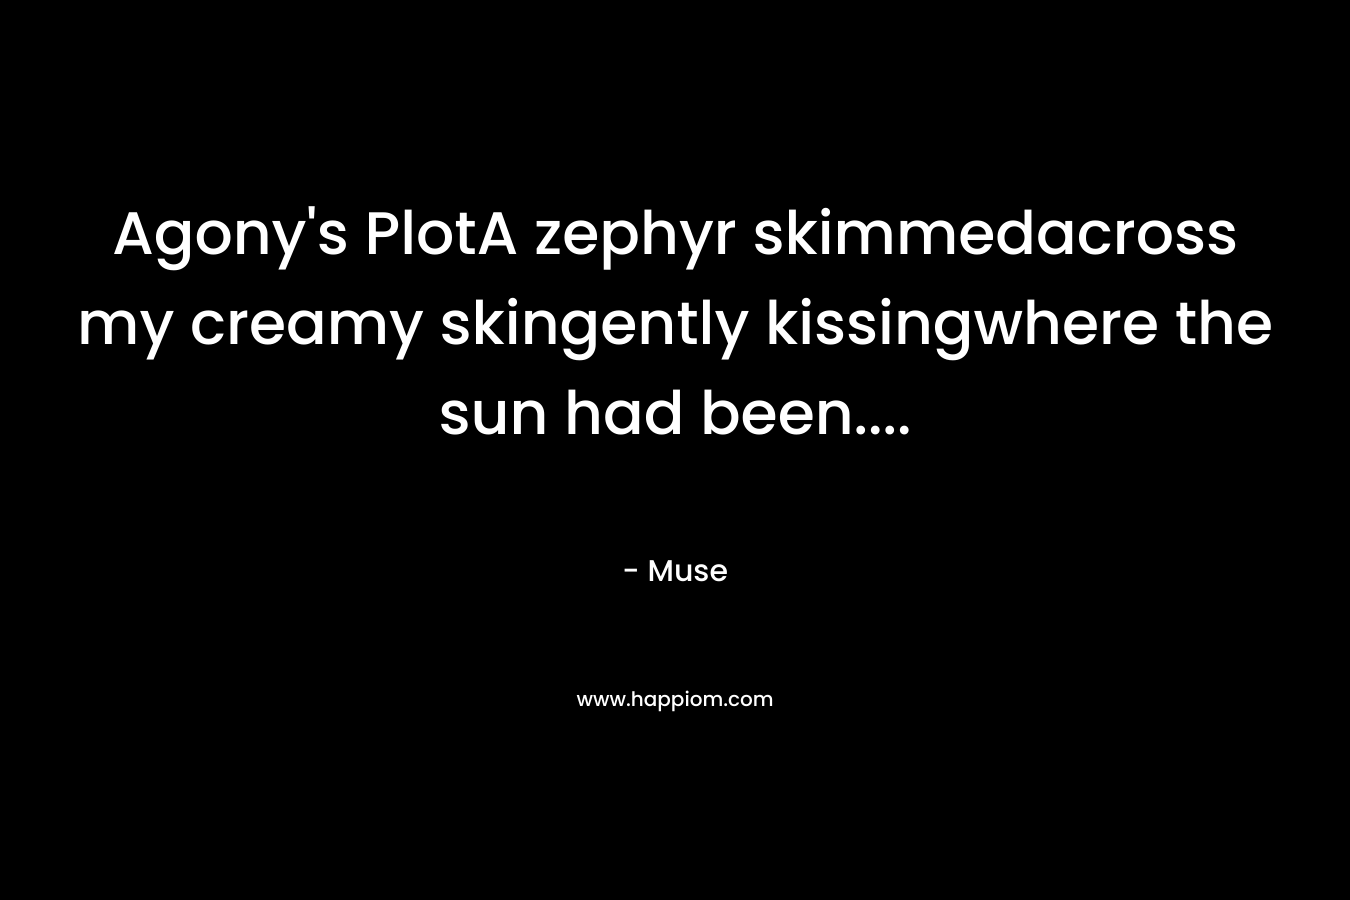 Agony's PlotA zephyr skimmedacross my creamy skingently kissingwhere the sun had been....